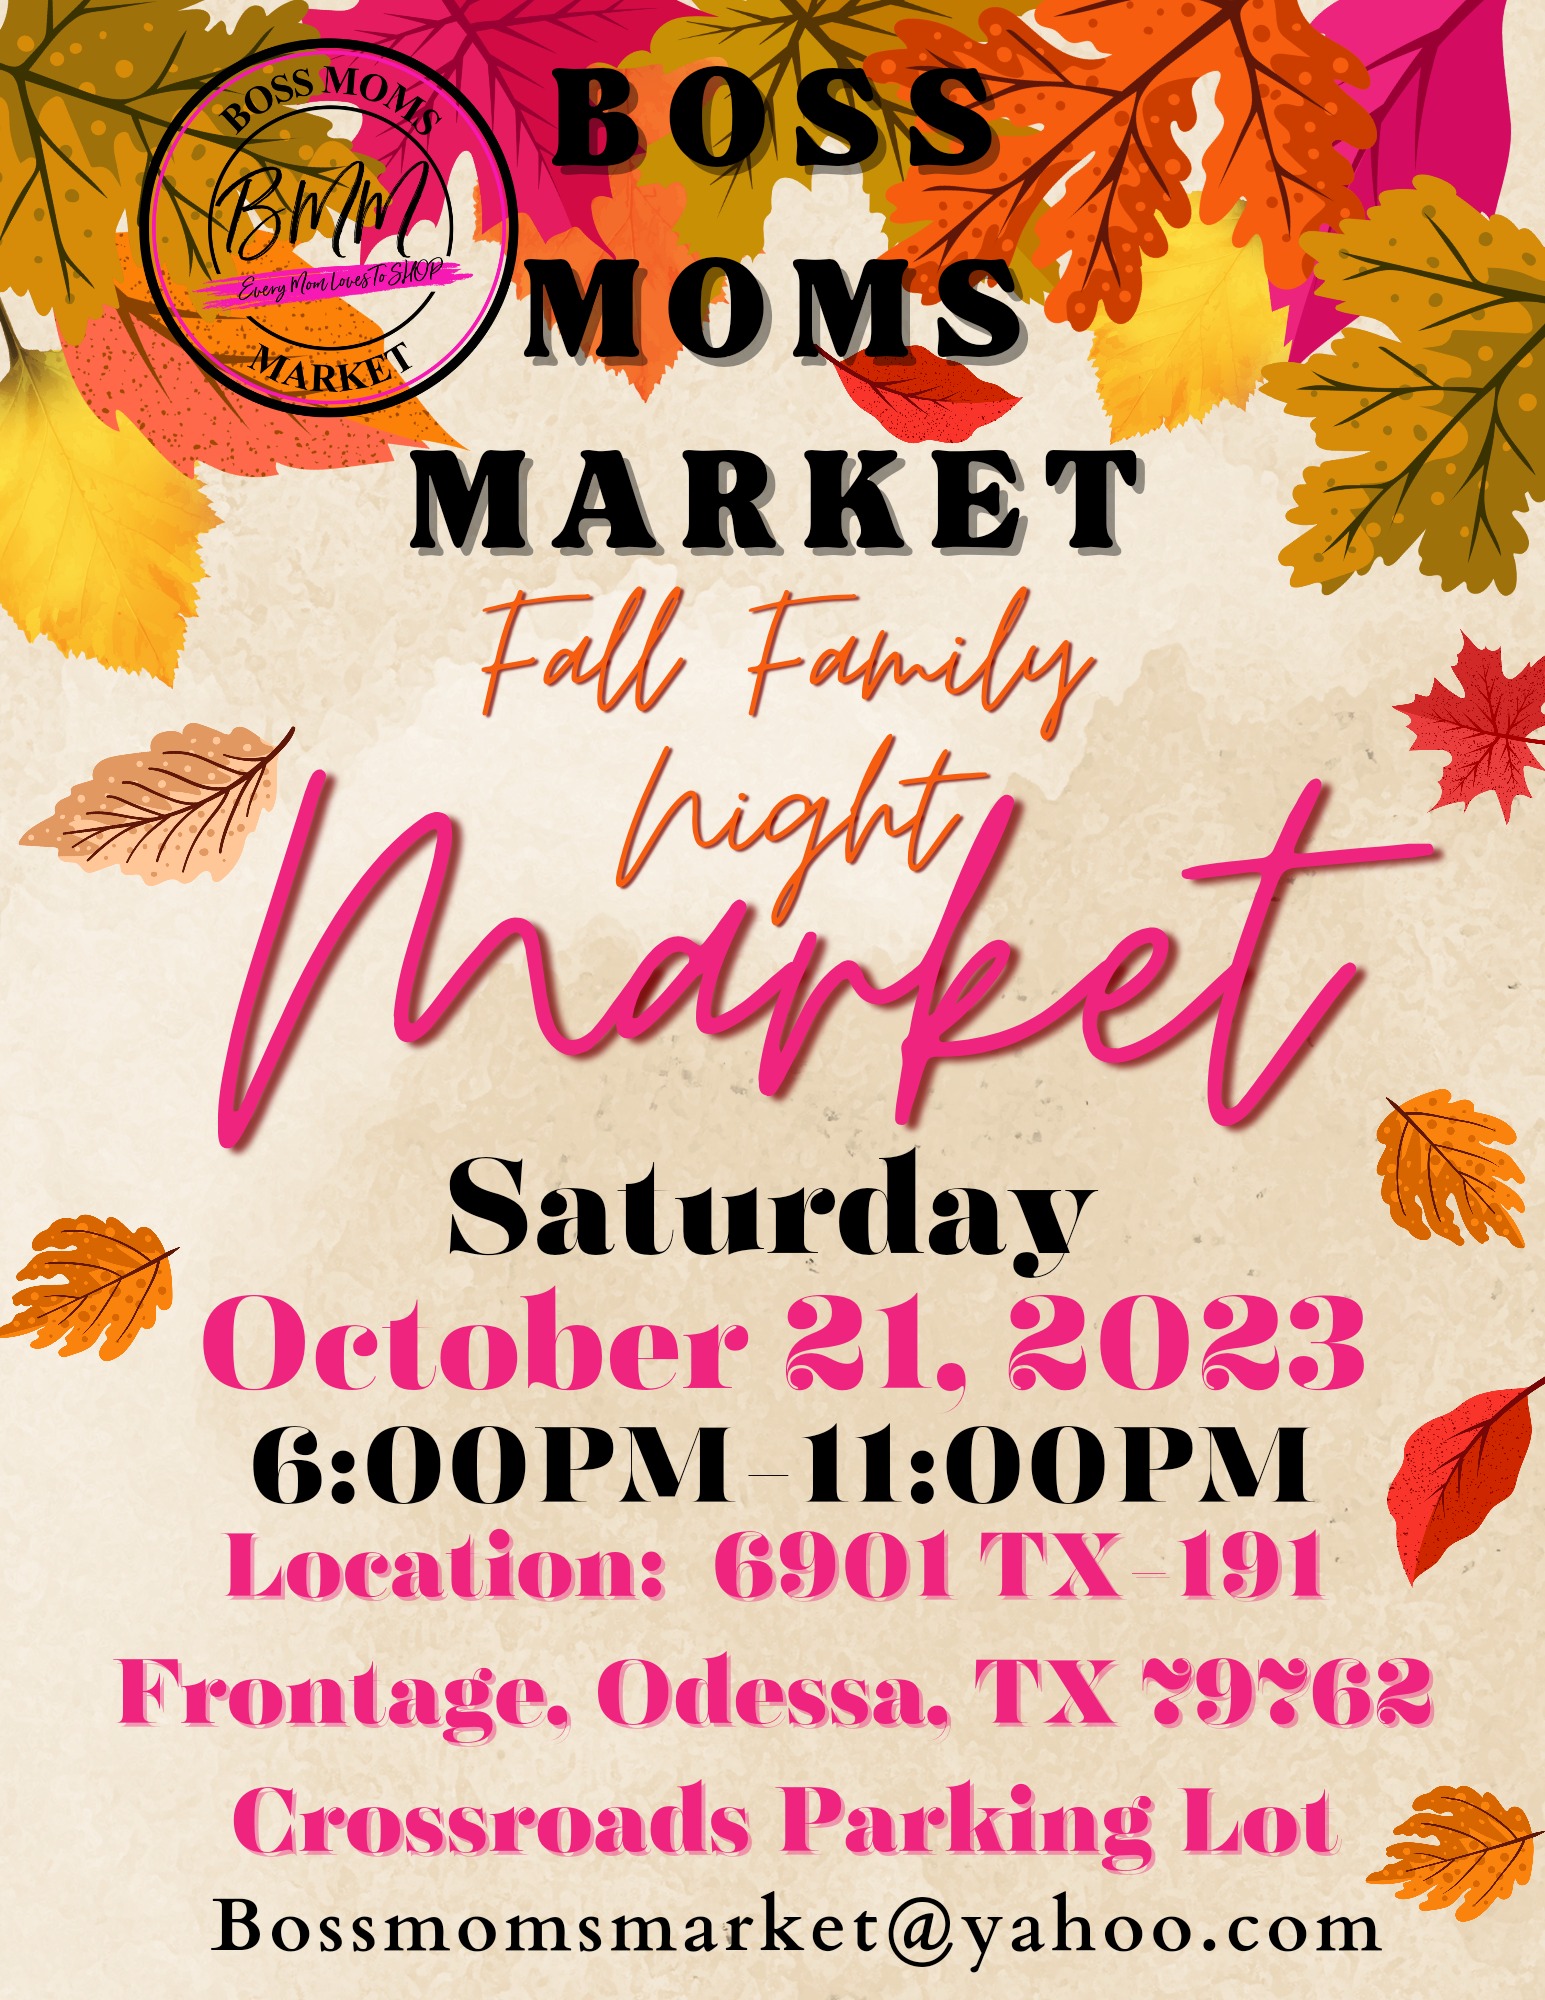 Boss Moms Market at Crossroads in Odessa Texas